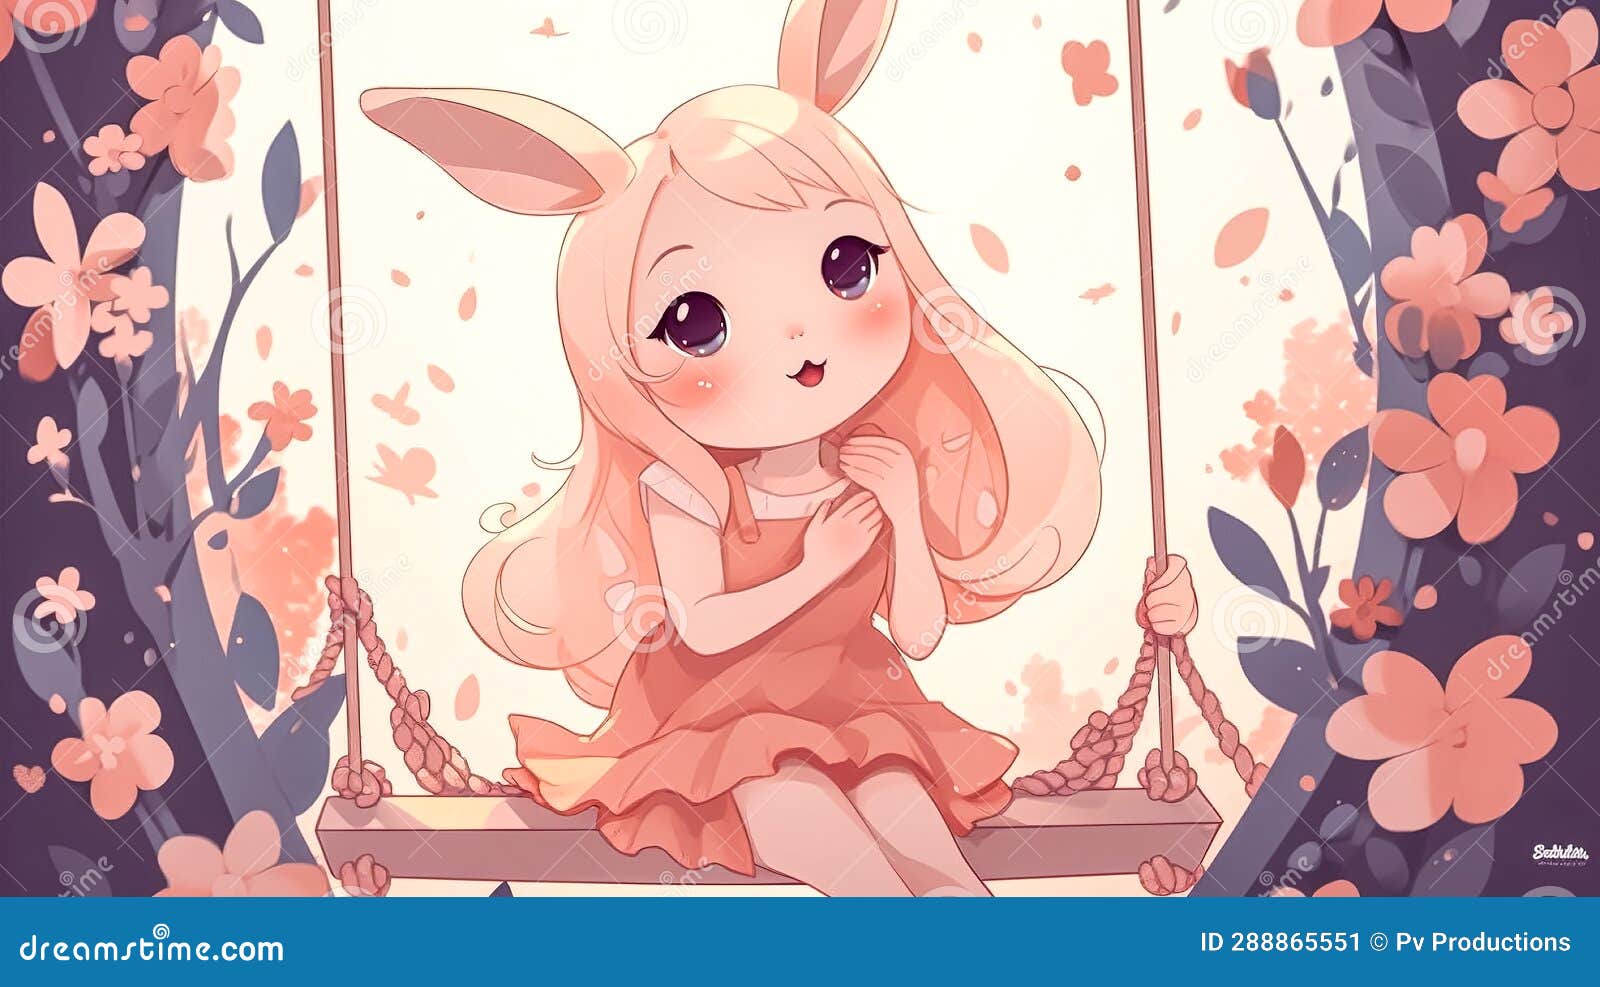 Black or pink?, Cute anime/kawaii style girl with a bunny